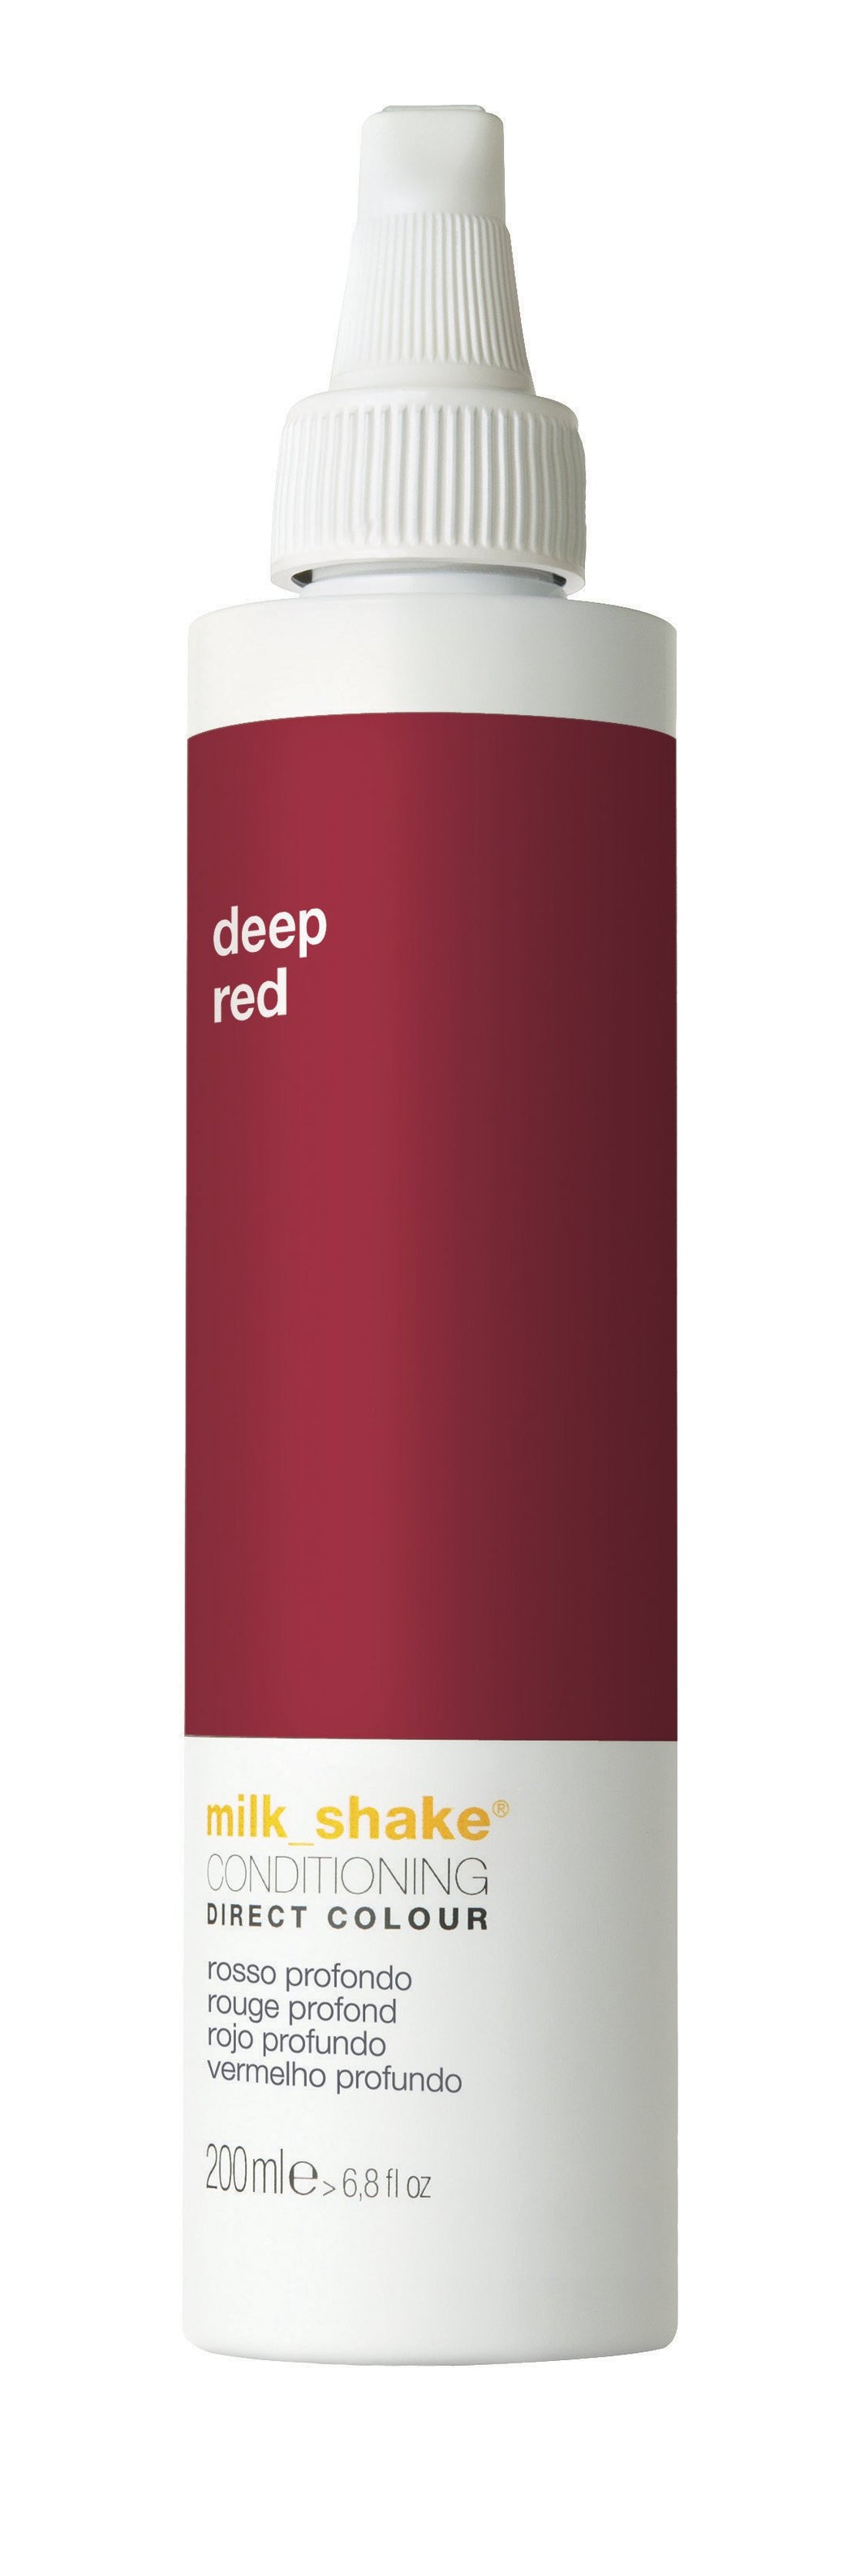 milk_shake direct colour deep red-0